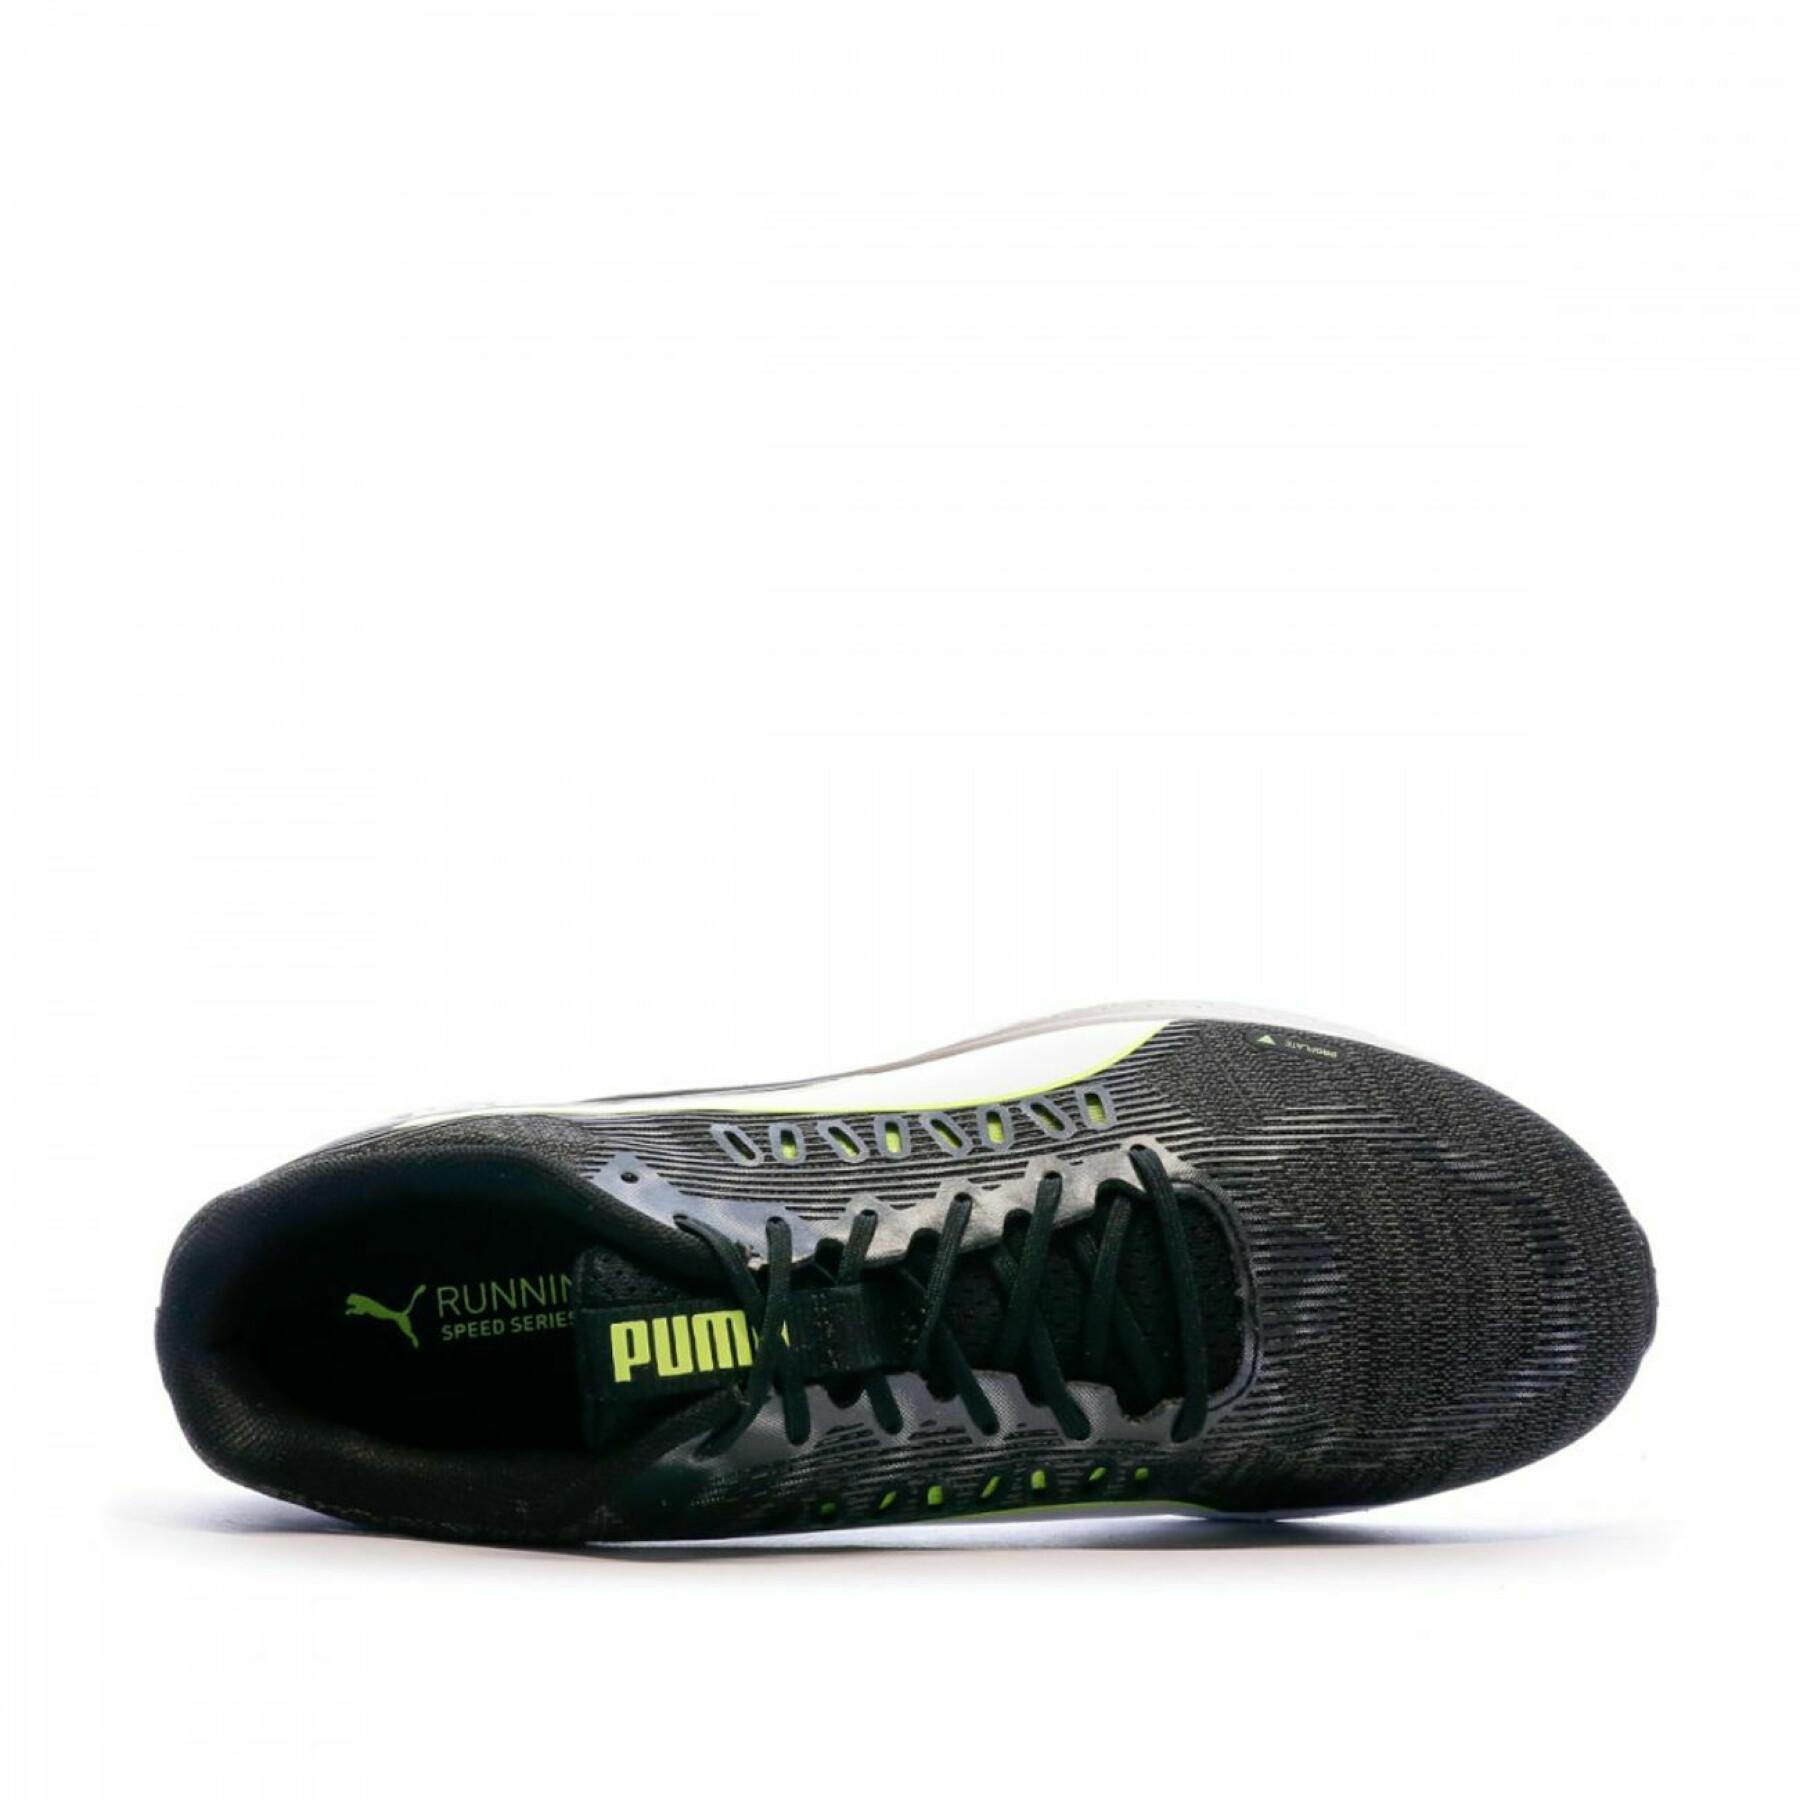 Shoes Puma Speed sutamina